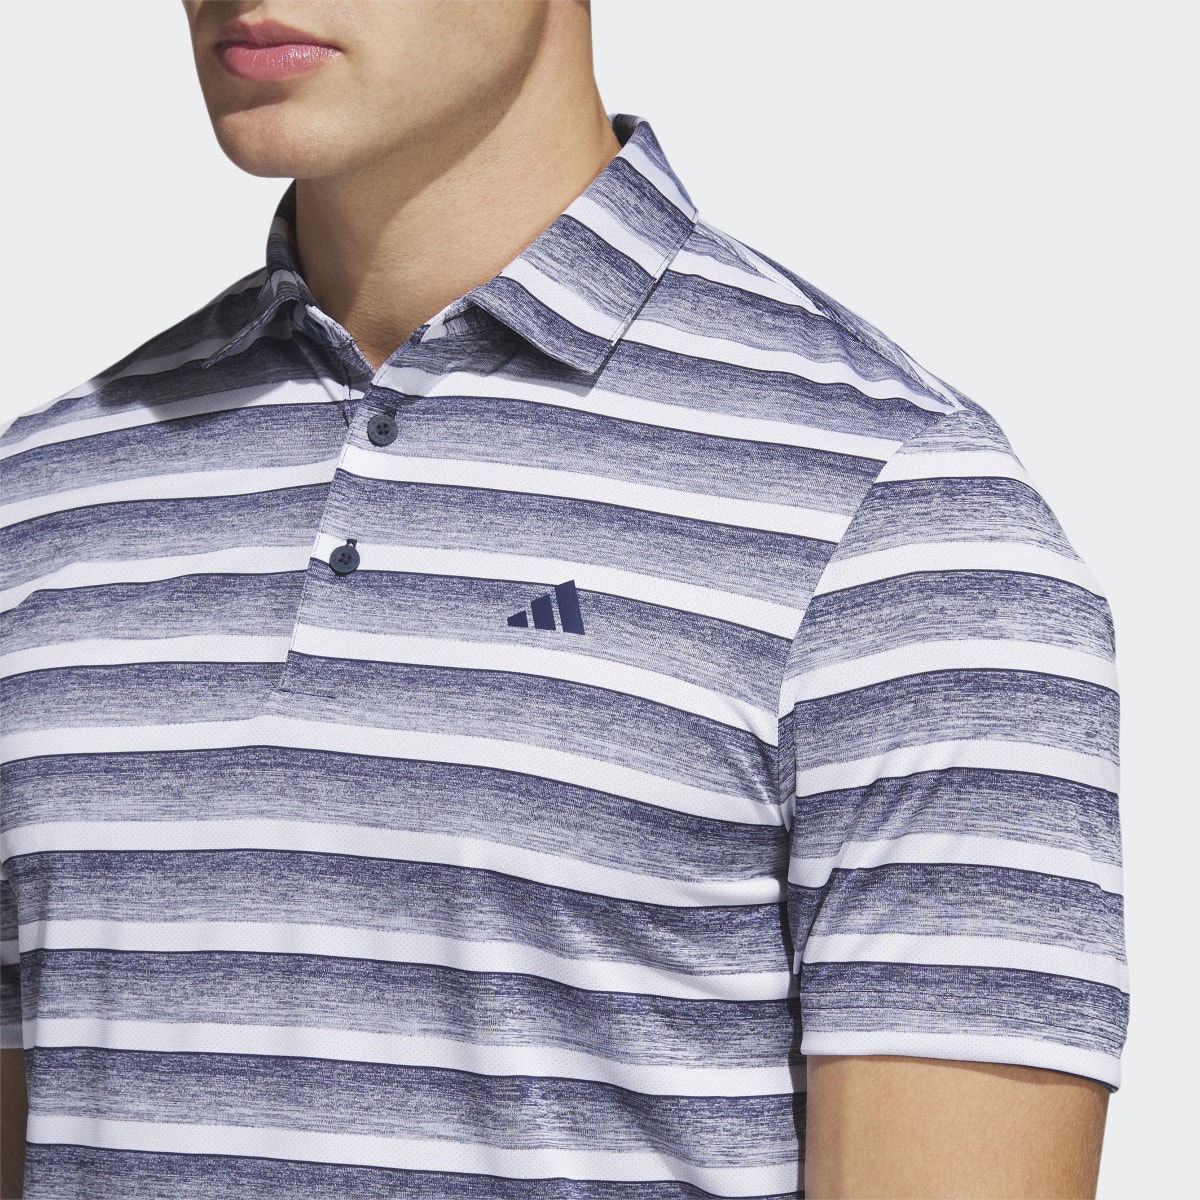 Adidas Two-Color Striped Golf Polo Shirt. 6